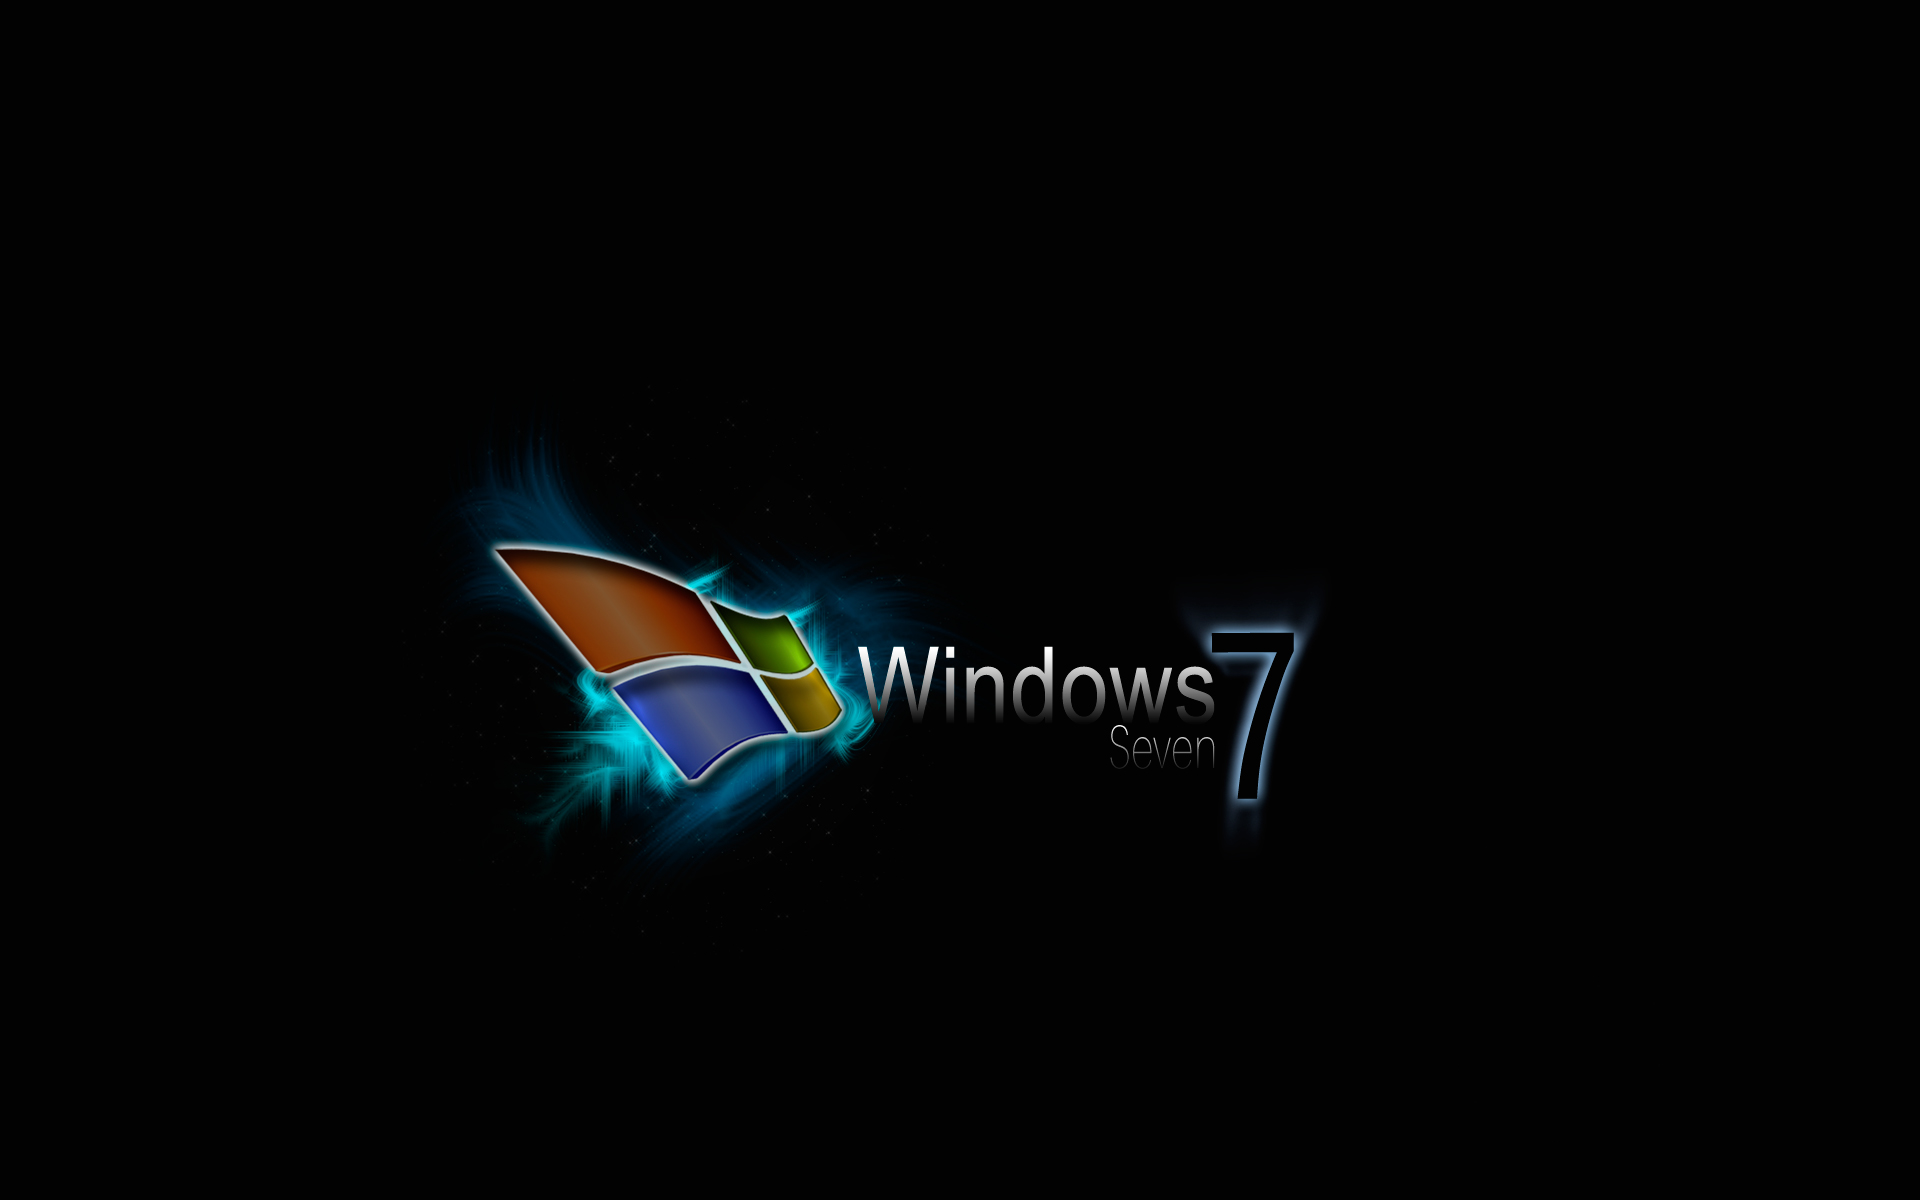 Windows 7 Black Wallpaper Background - Uncalke.com